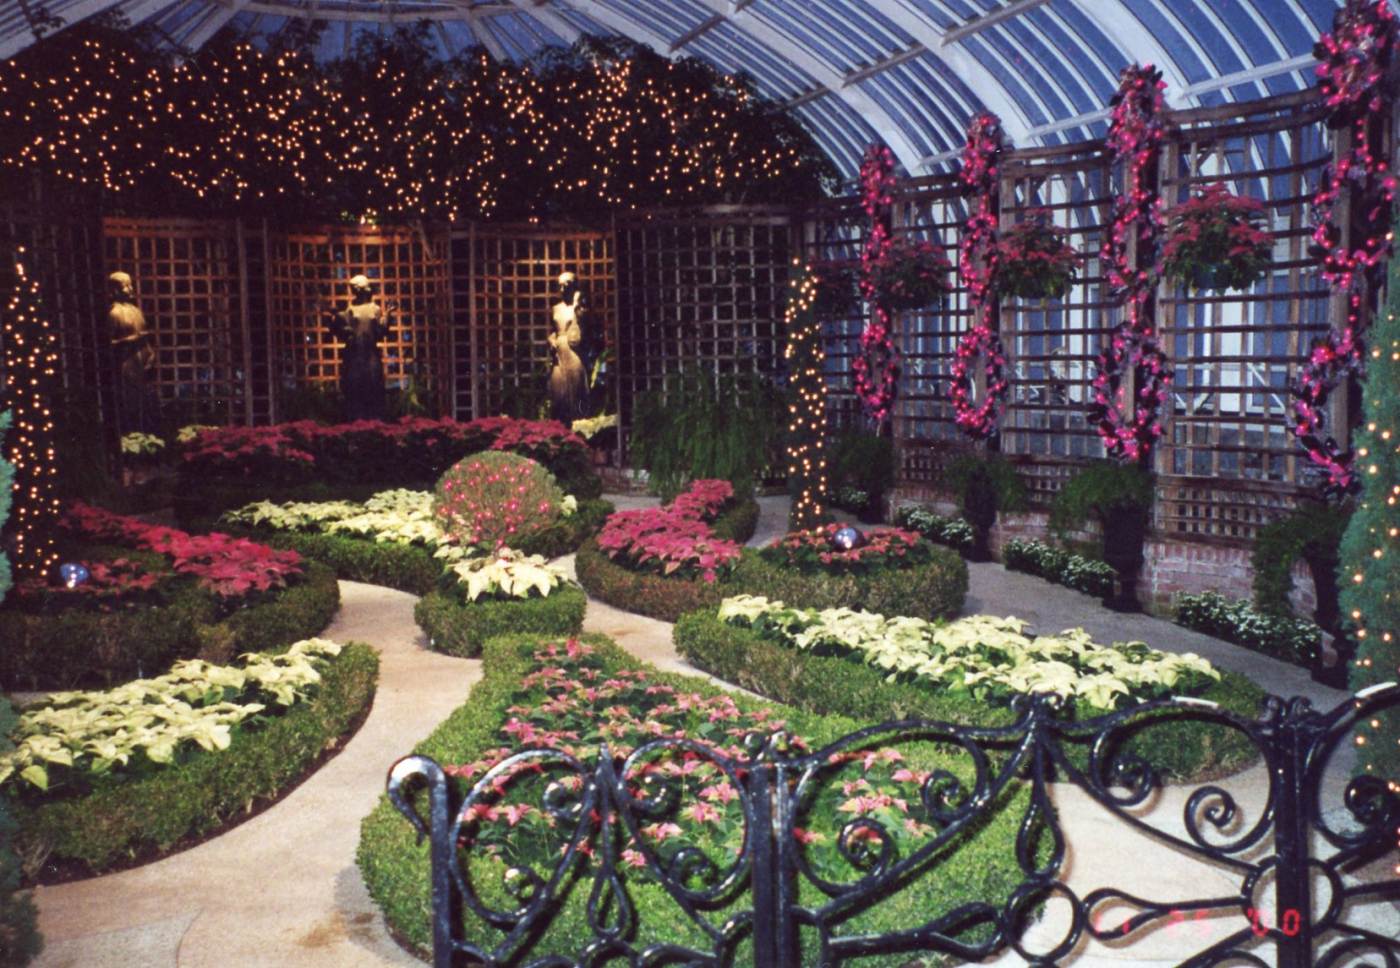 Phipps Conservatory Winter Flower Show and Light Garden